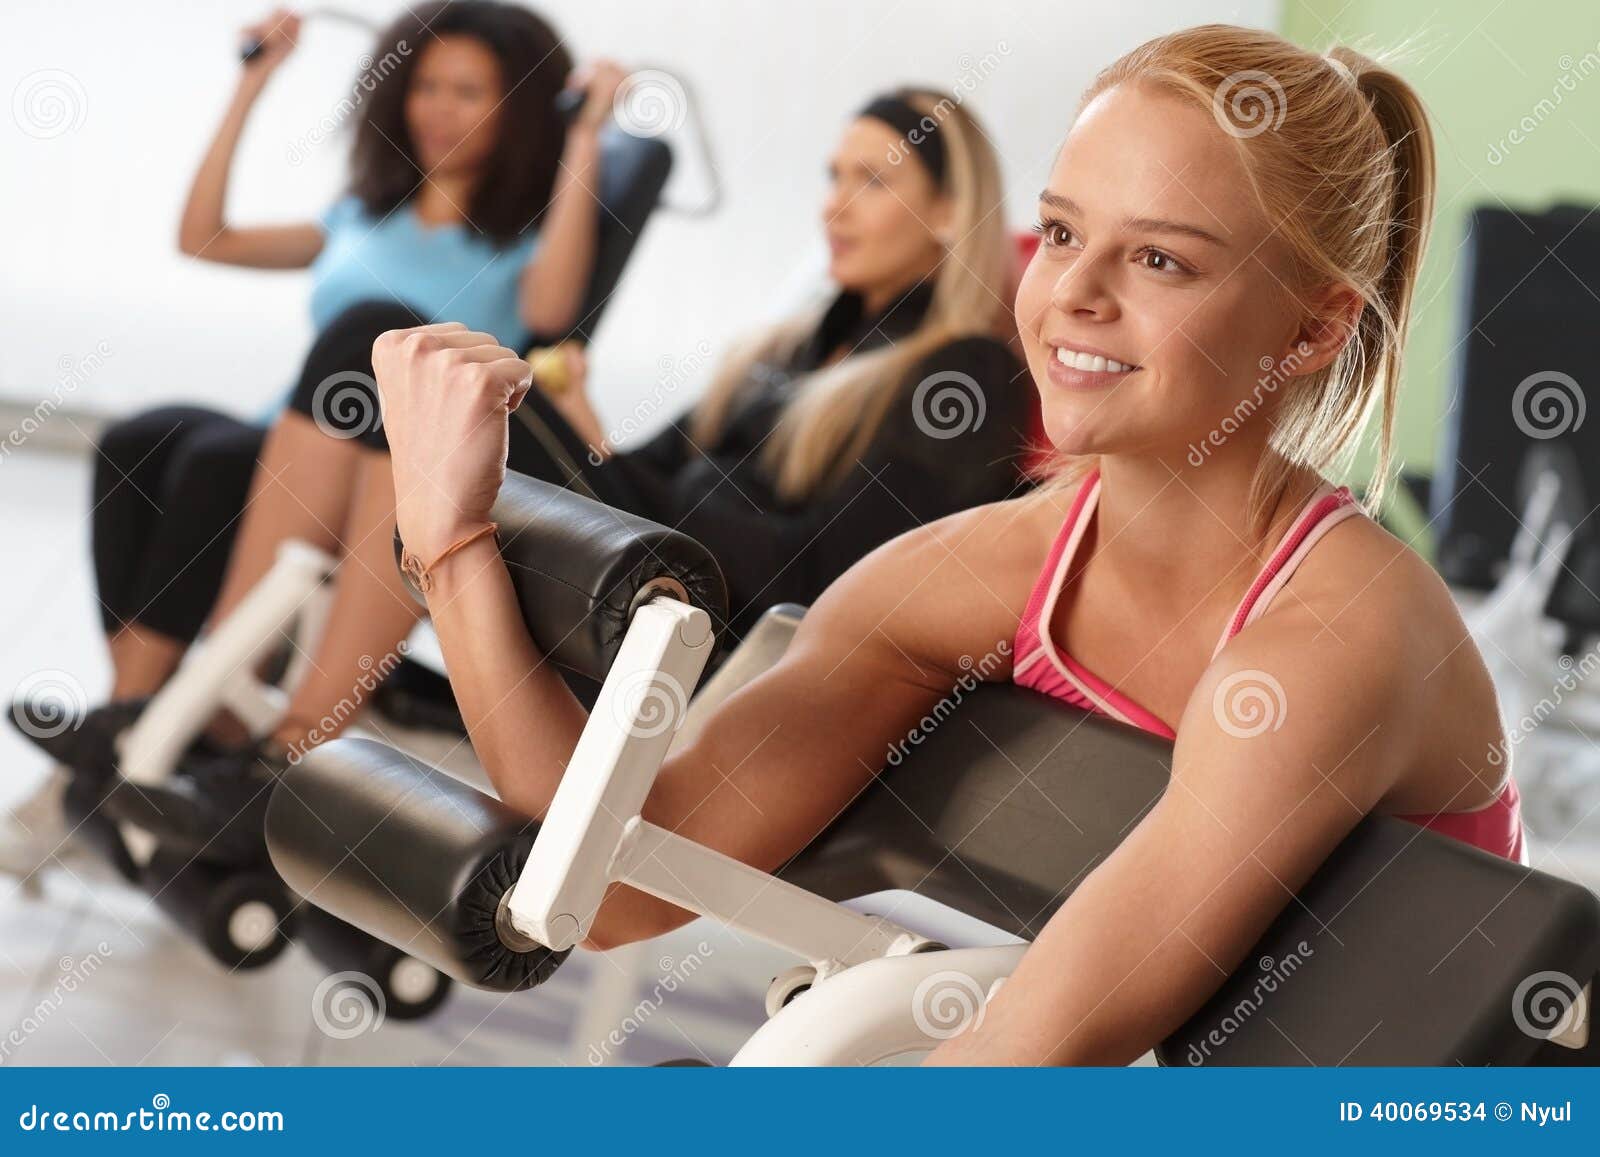 Exercising on Weight Machine Stock Photo - Image of 2025, indoor: 40069534